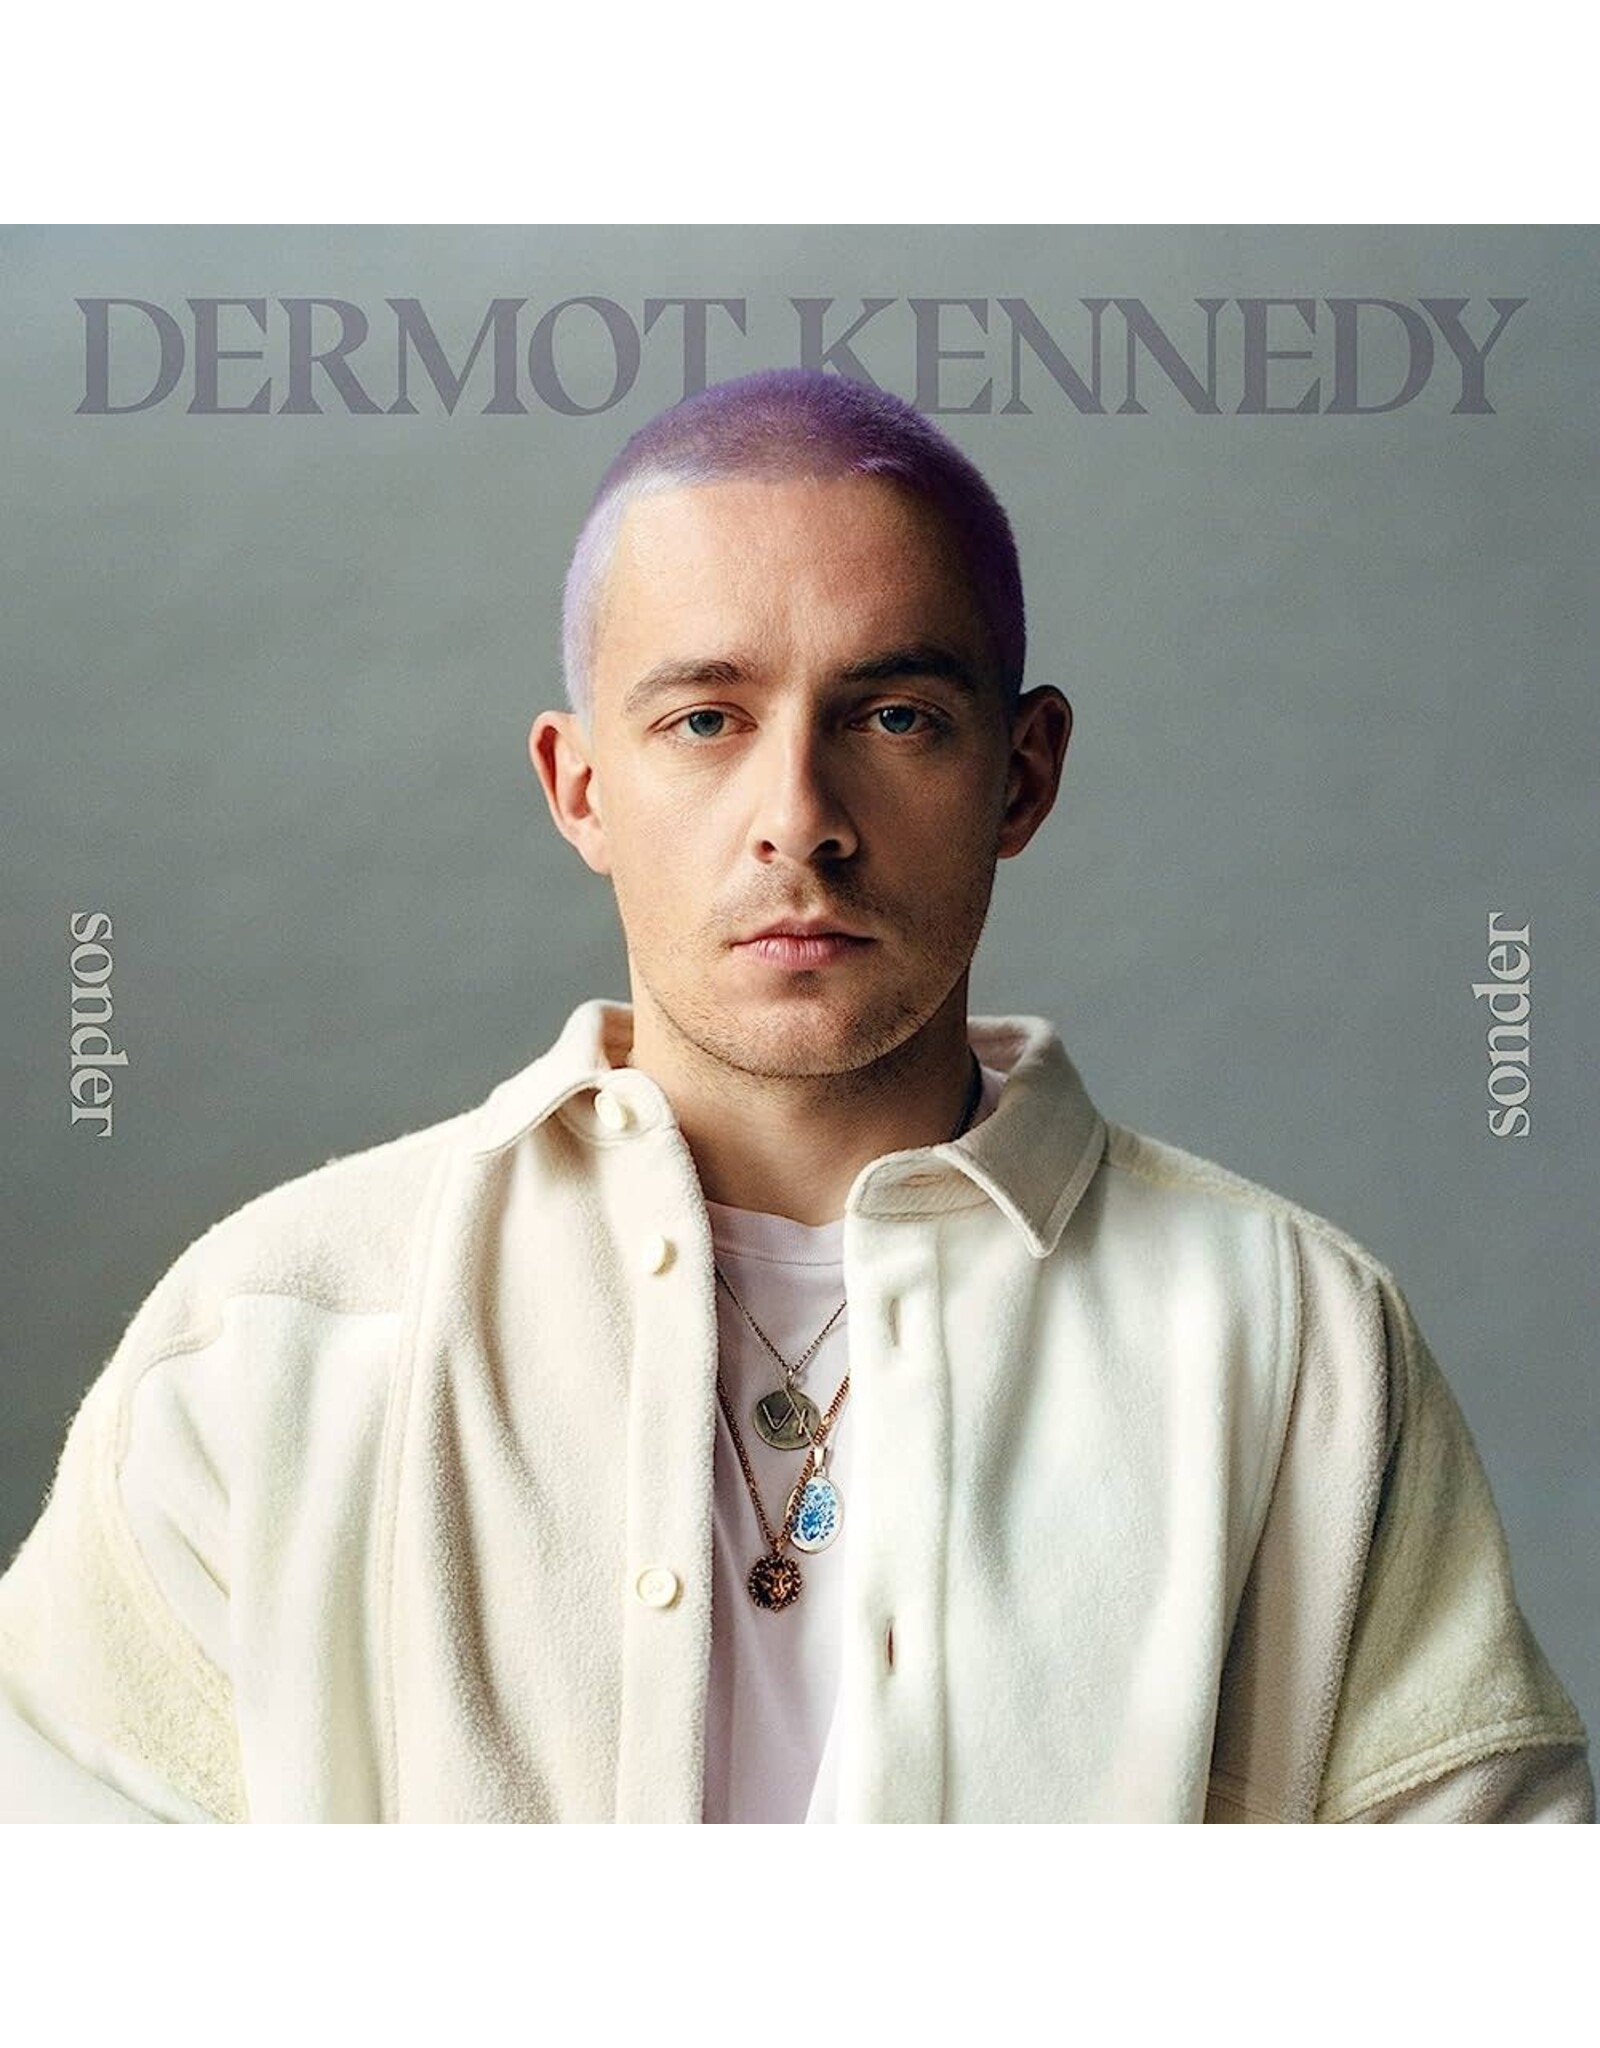 Dermot Kennedy - Sonder (Exclusive Aqua Blue Vinyl)